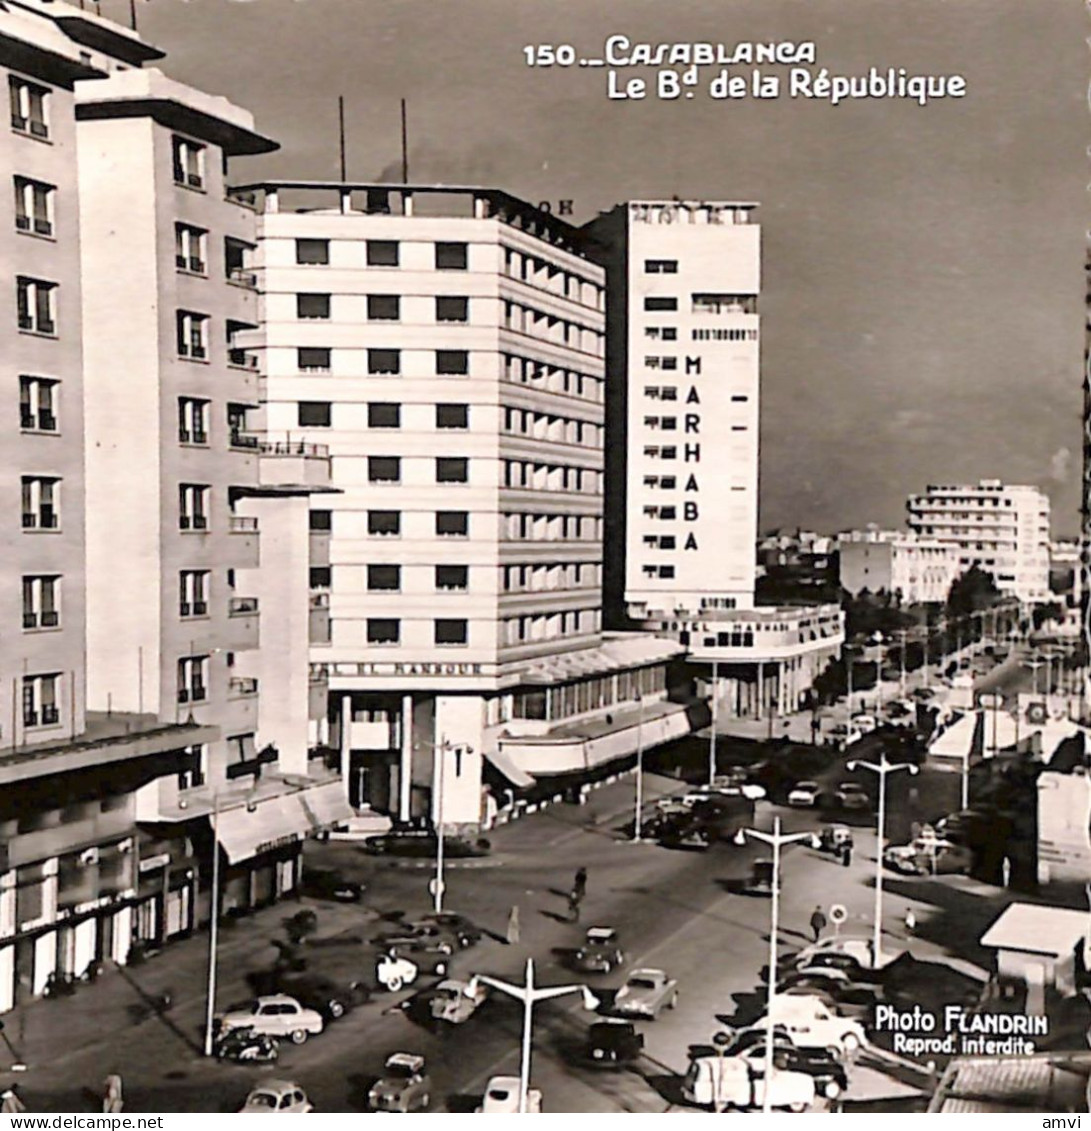 23-0415 Casablanca - lot de 18 cartes postales